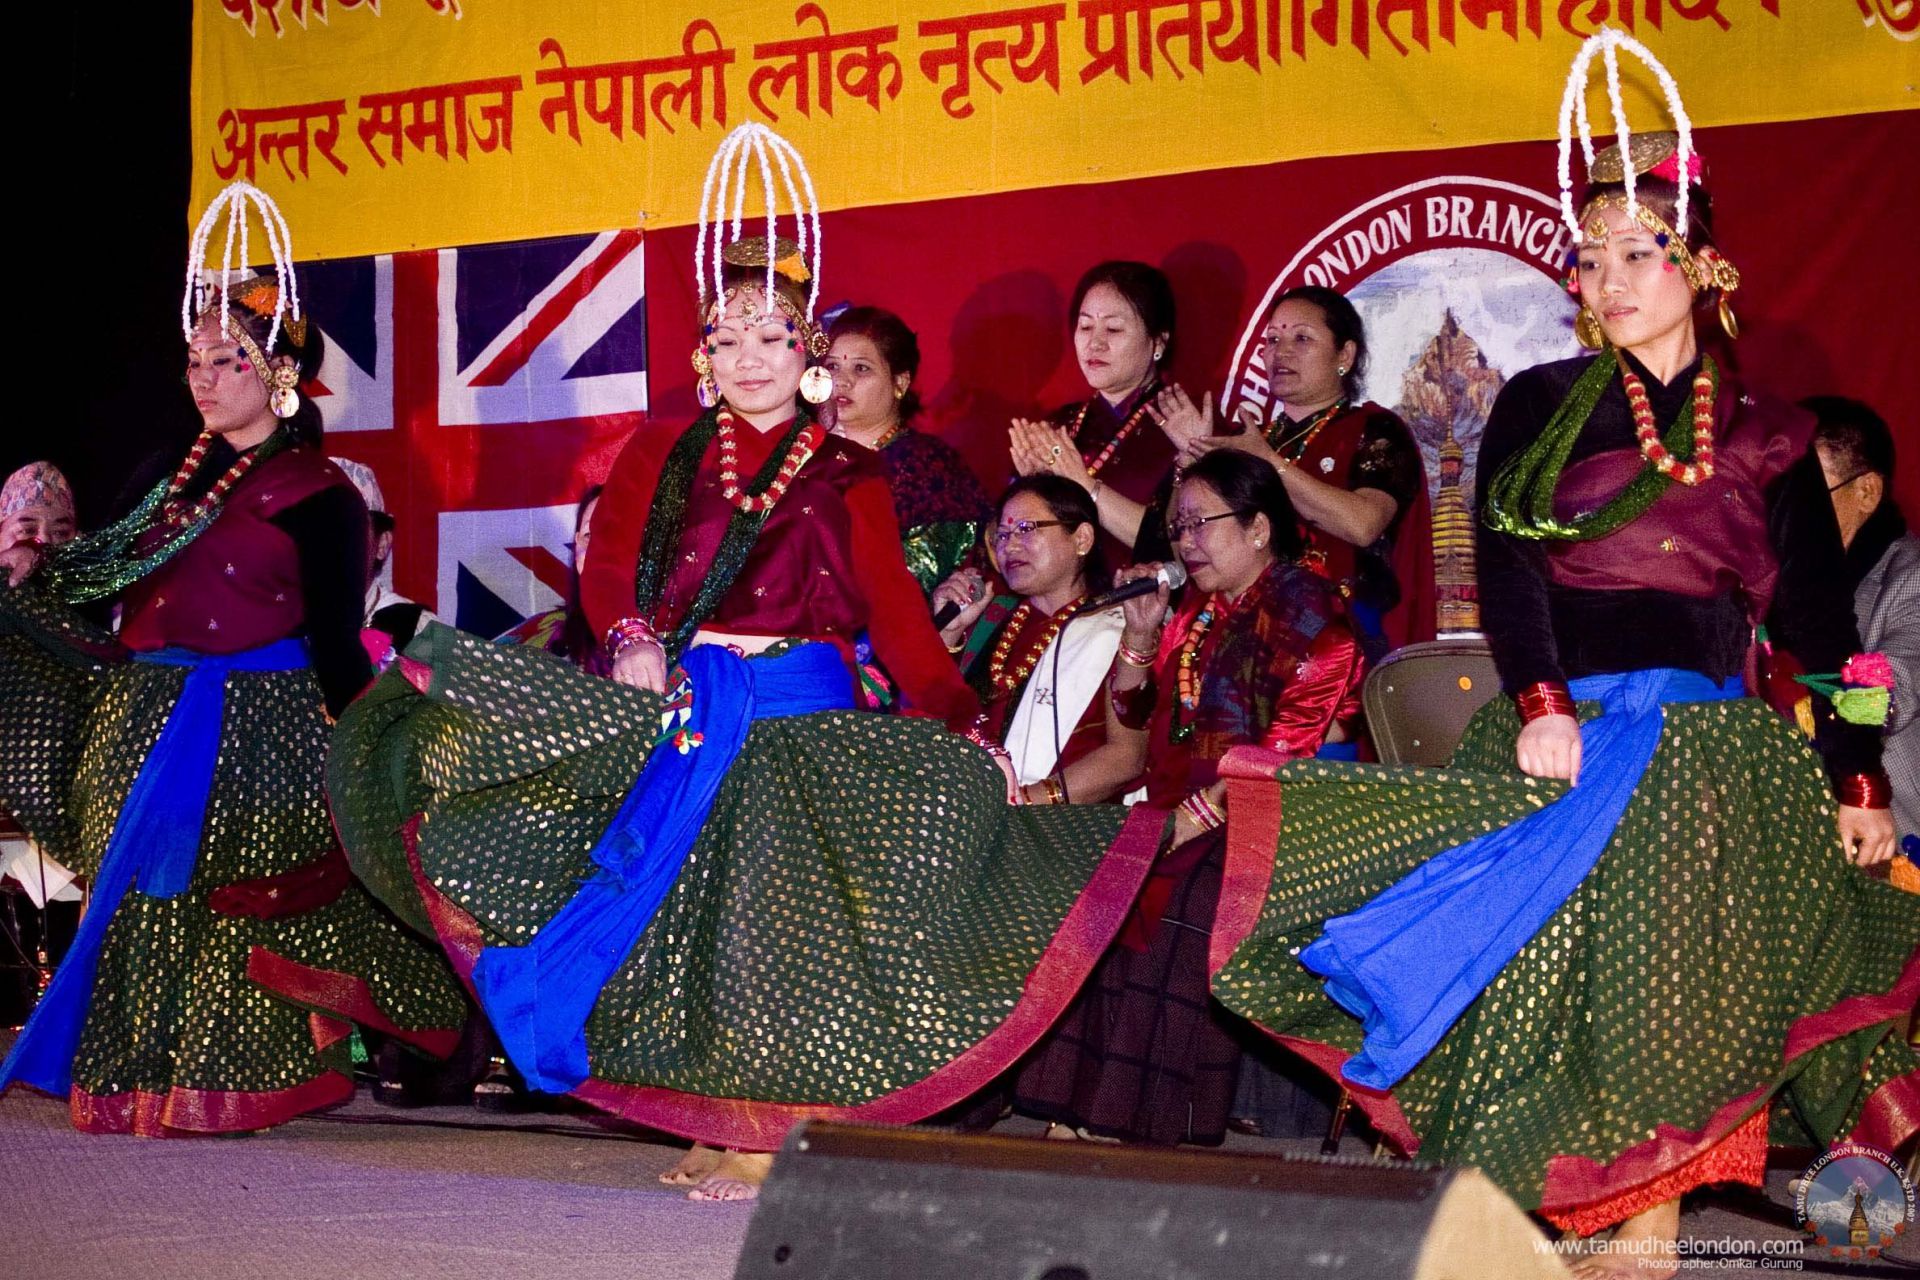 Ghatu dance